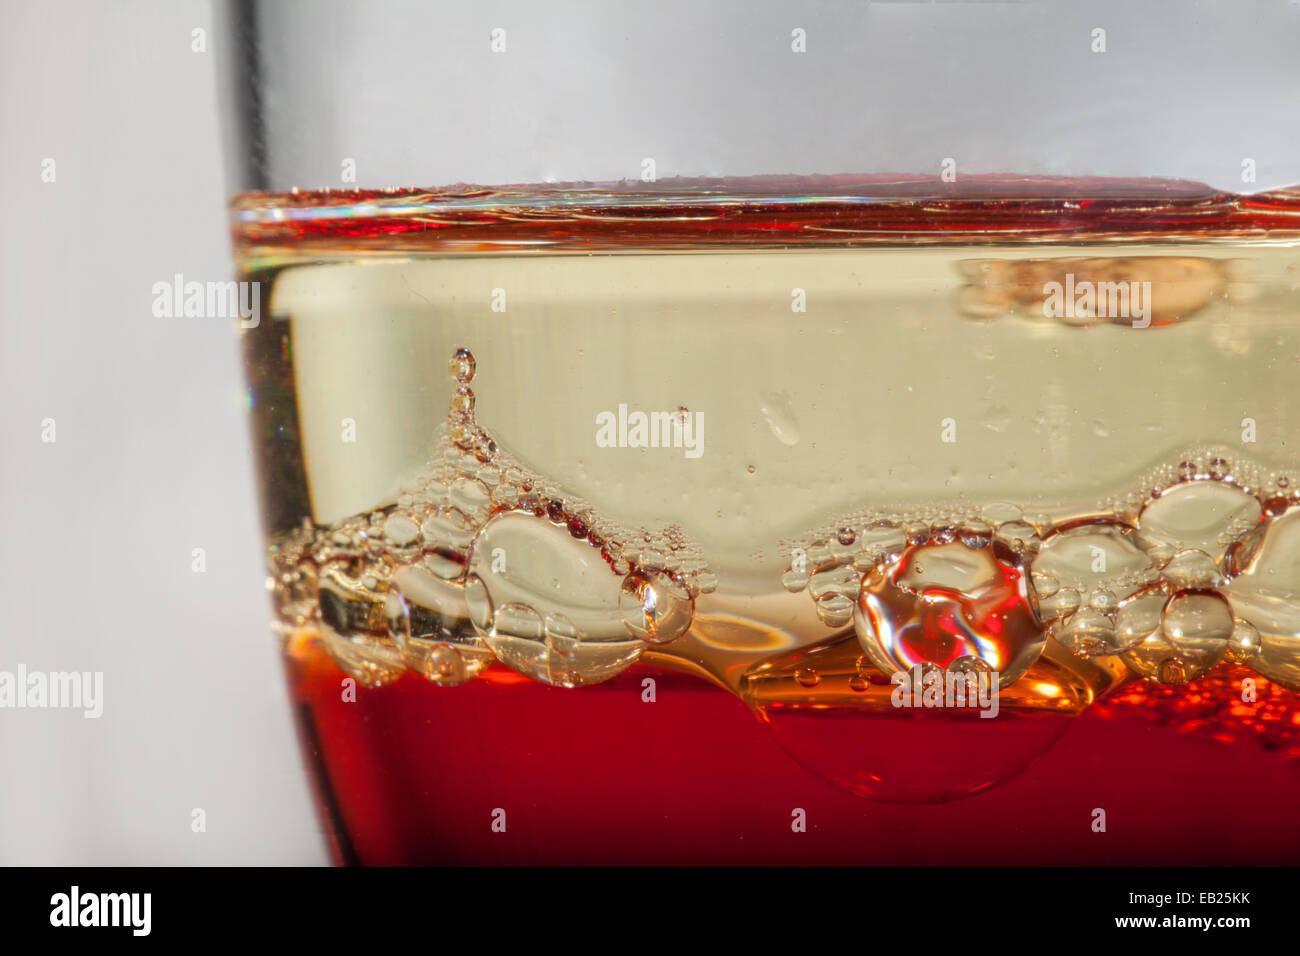 Heterogeneous liquids in a glass Stock Photo